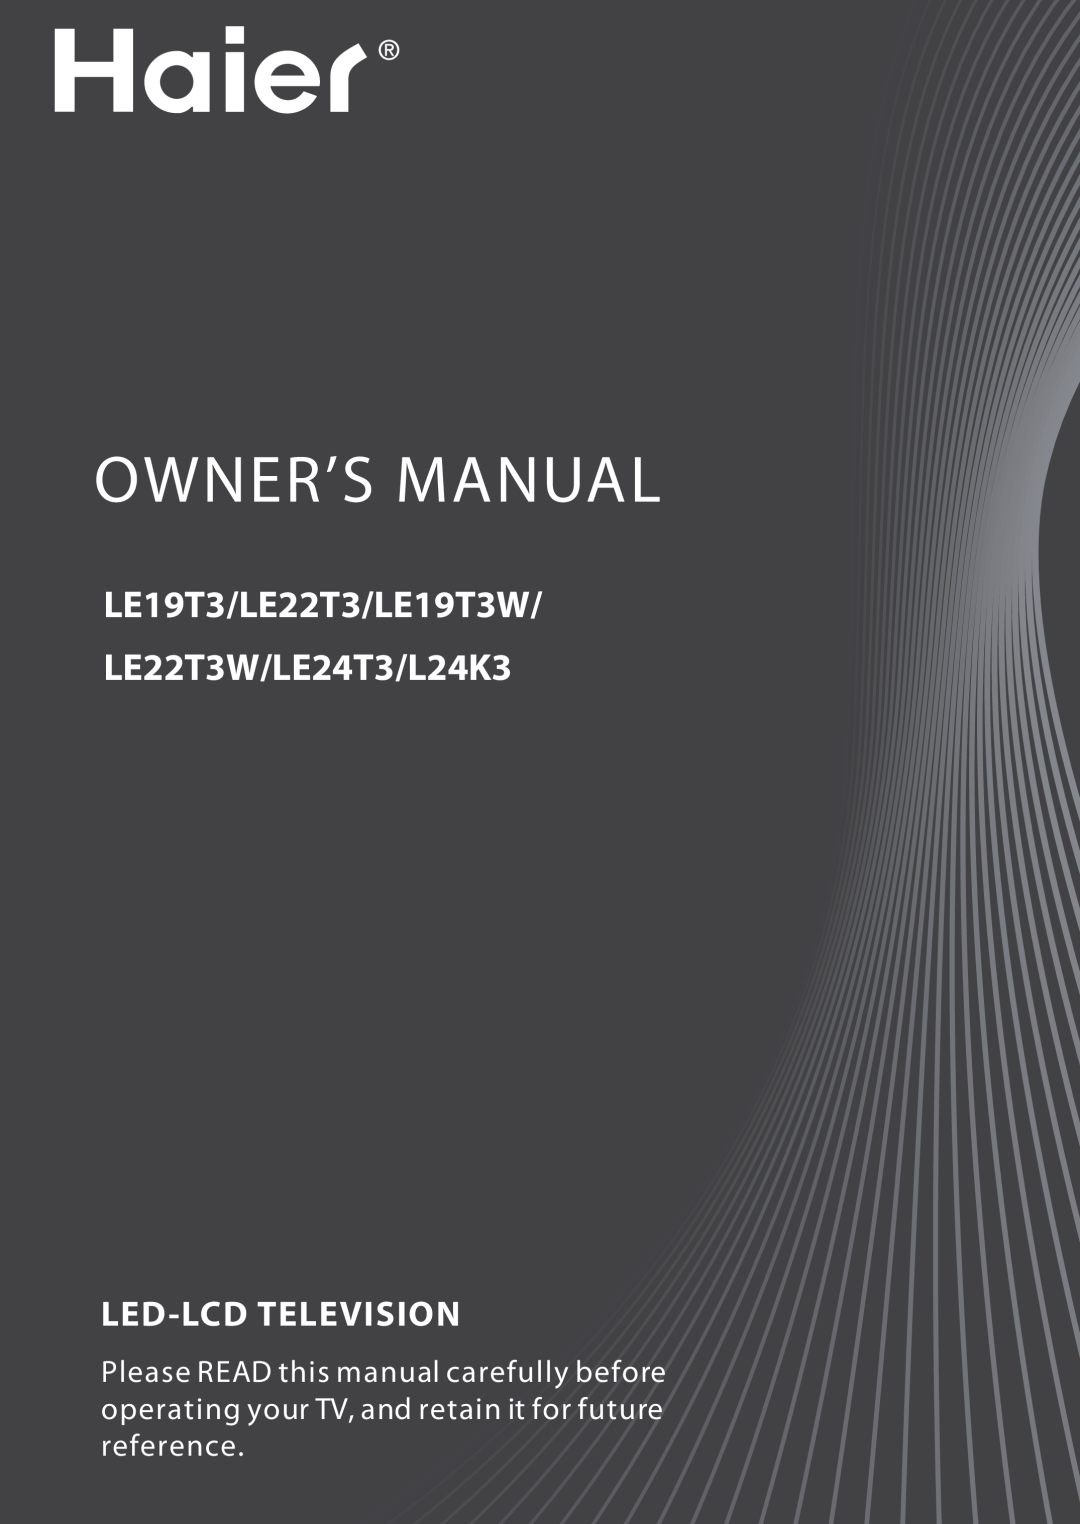 Haier owner manual LE19T3/LE22T3/LE19T3W LE22T3W/LE24T3/L24K3, Led-Lcd Television 